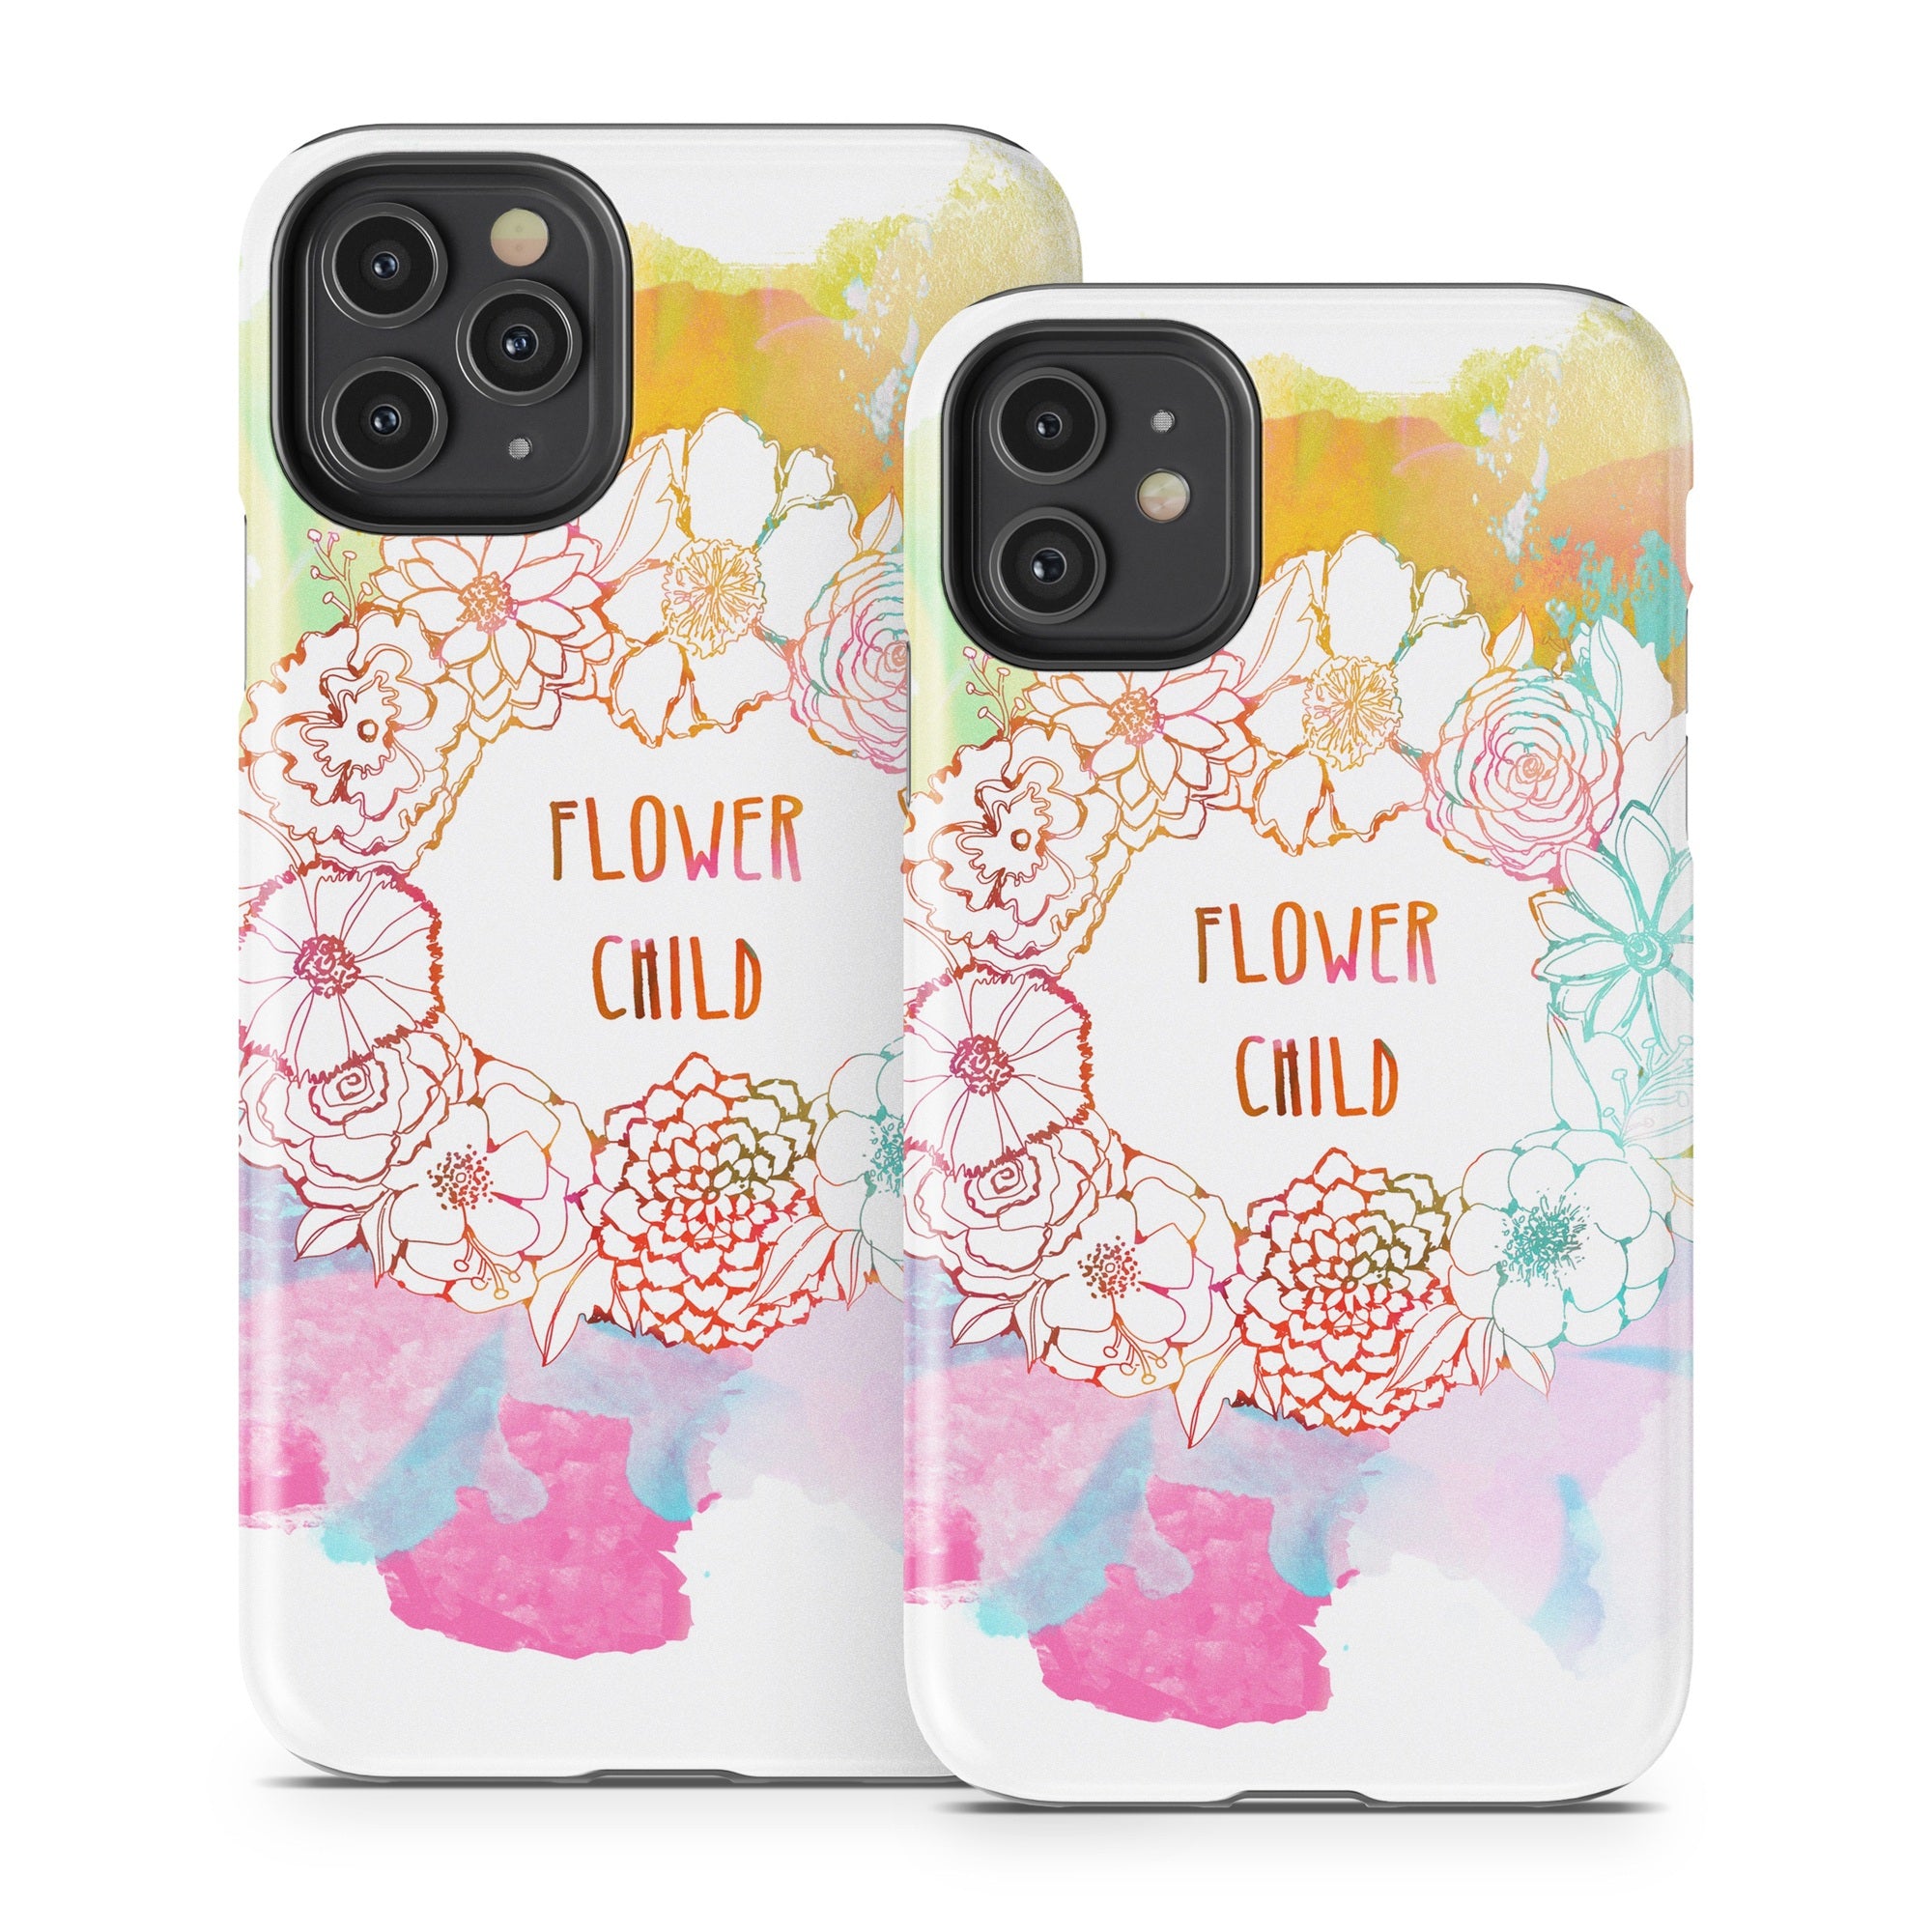 Flower Child - Apple iPhone 11 Tough Case